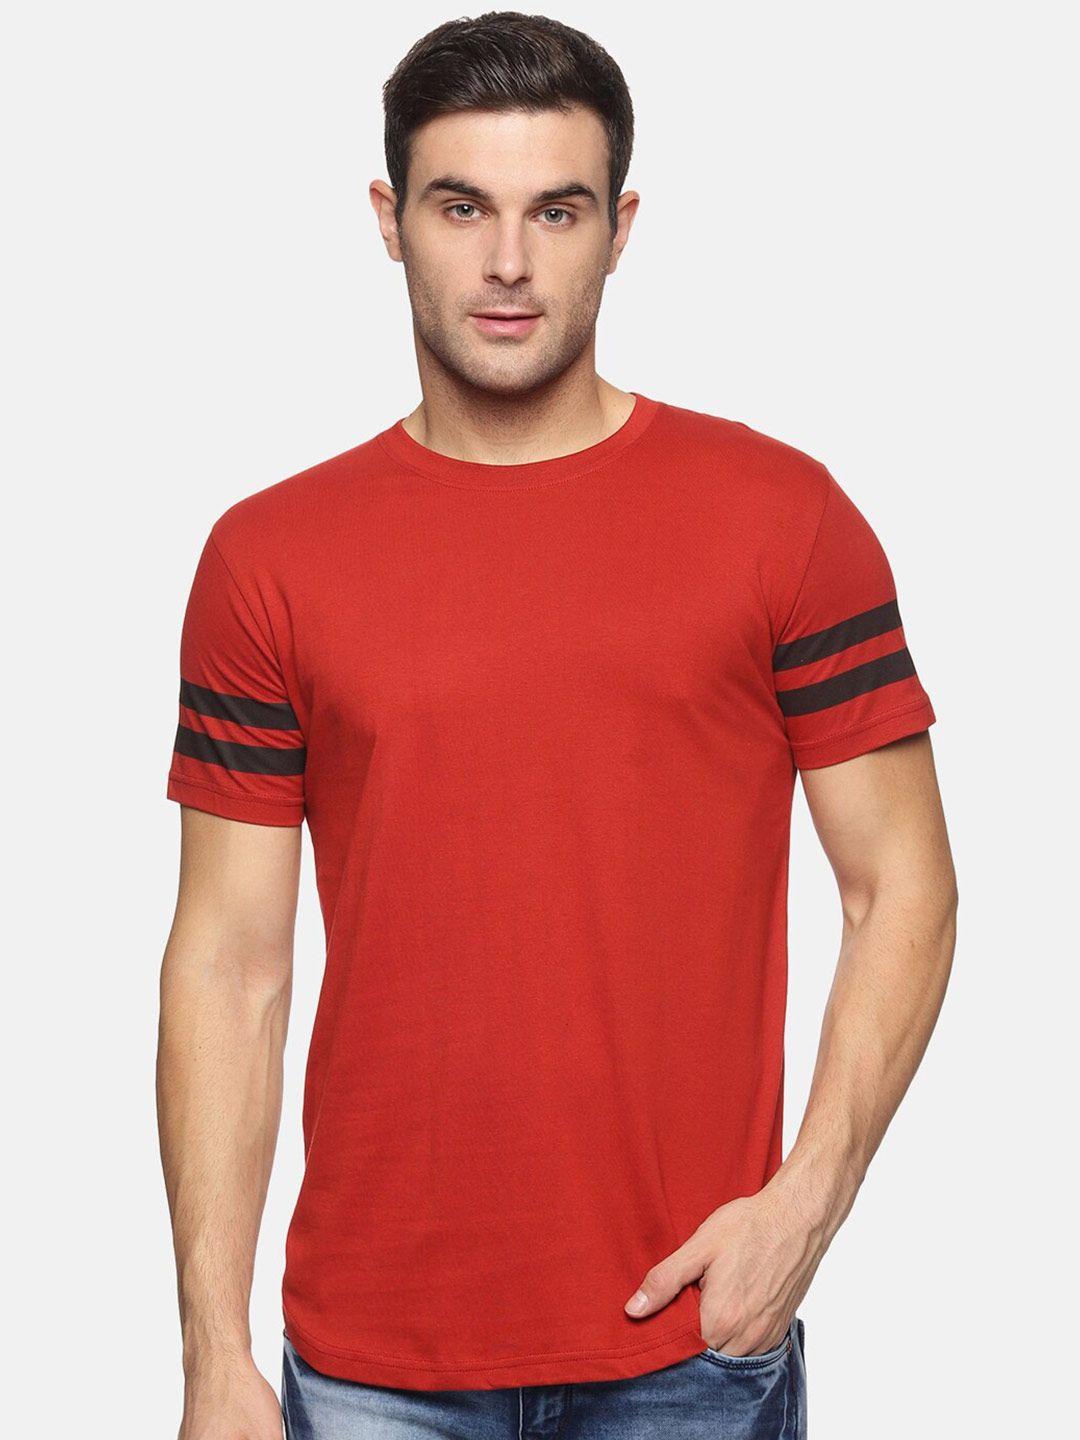 trends tower men red t-shirt